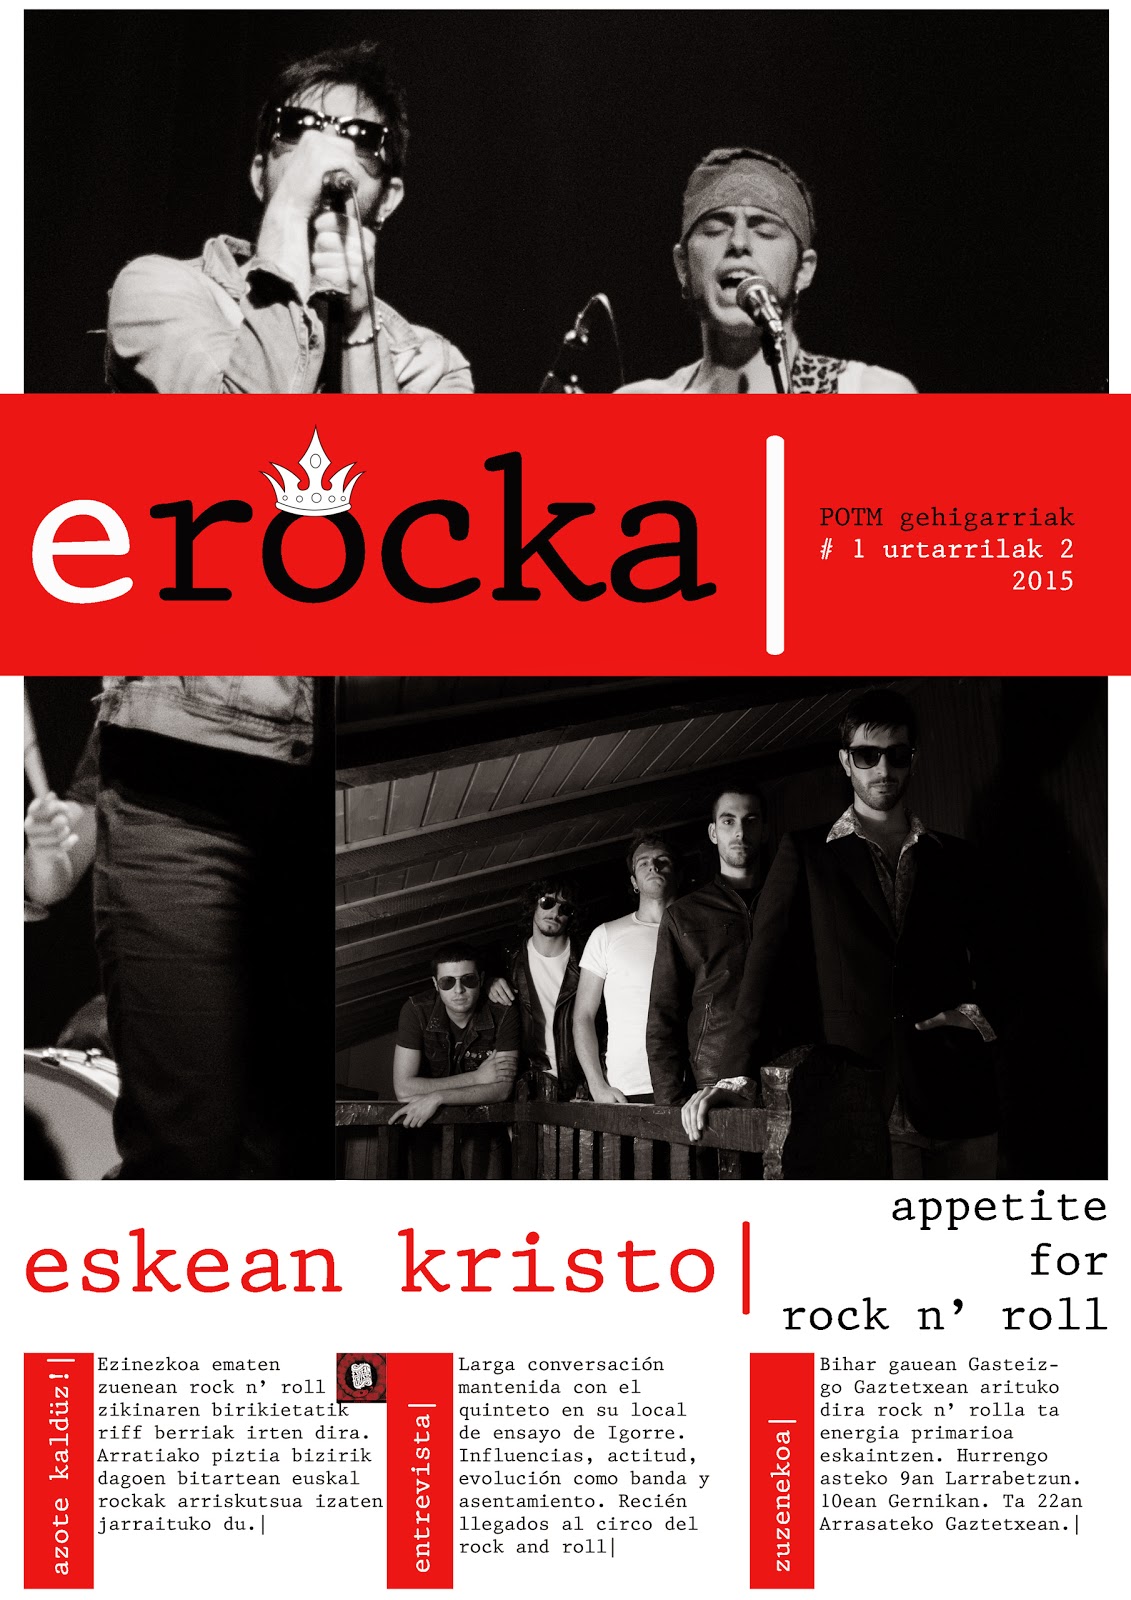 http://prideofthemonster.blogspot.com.es/2015/01/eskean-kristo-appetite-for-rock-n-roll.html